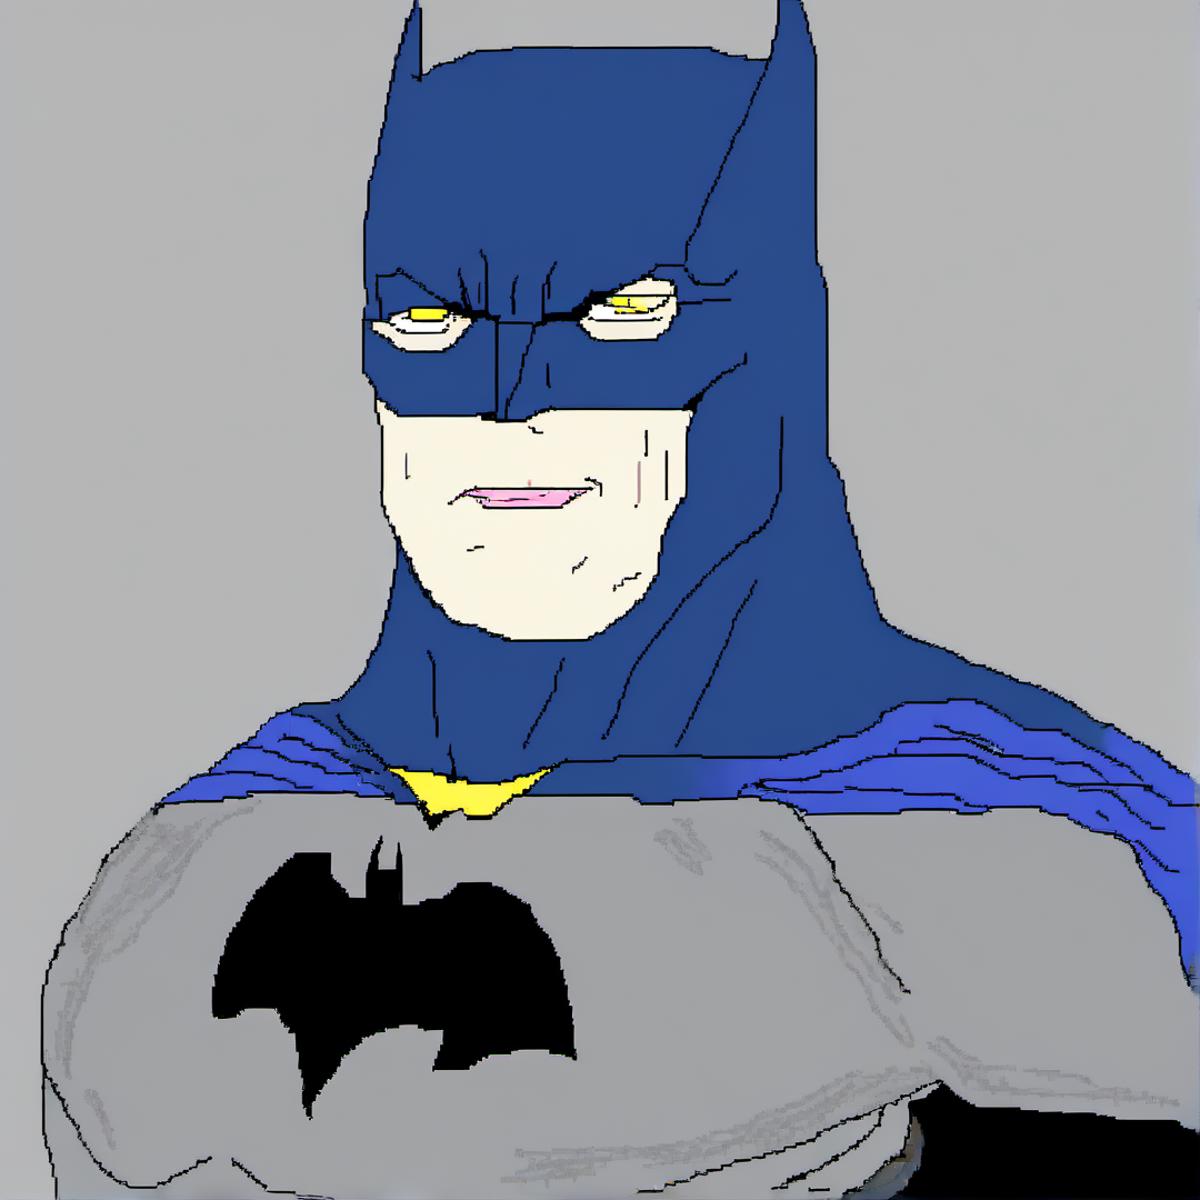 A cartoon drawing of a man wearing a batman costume.